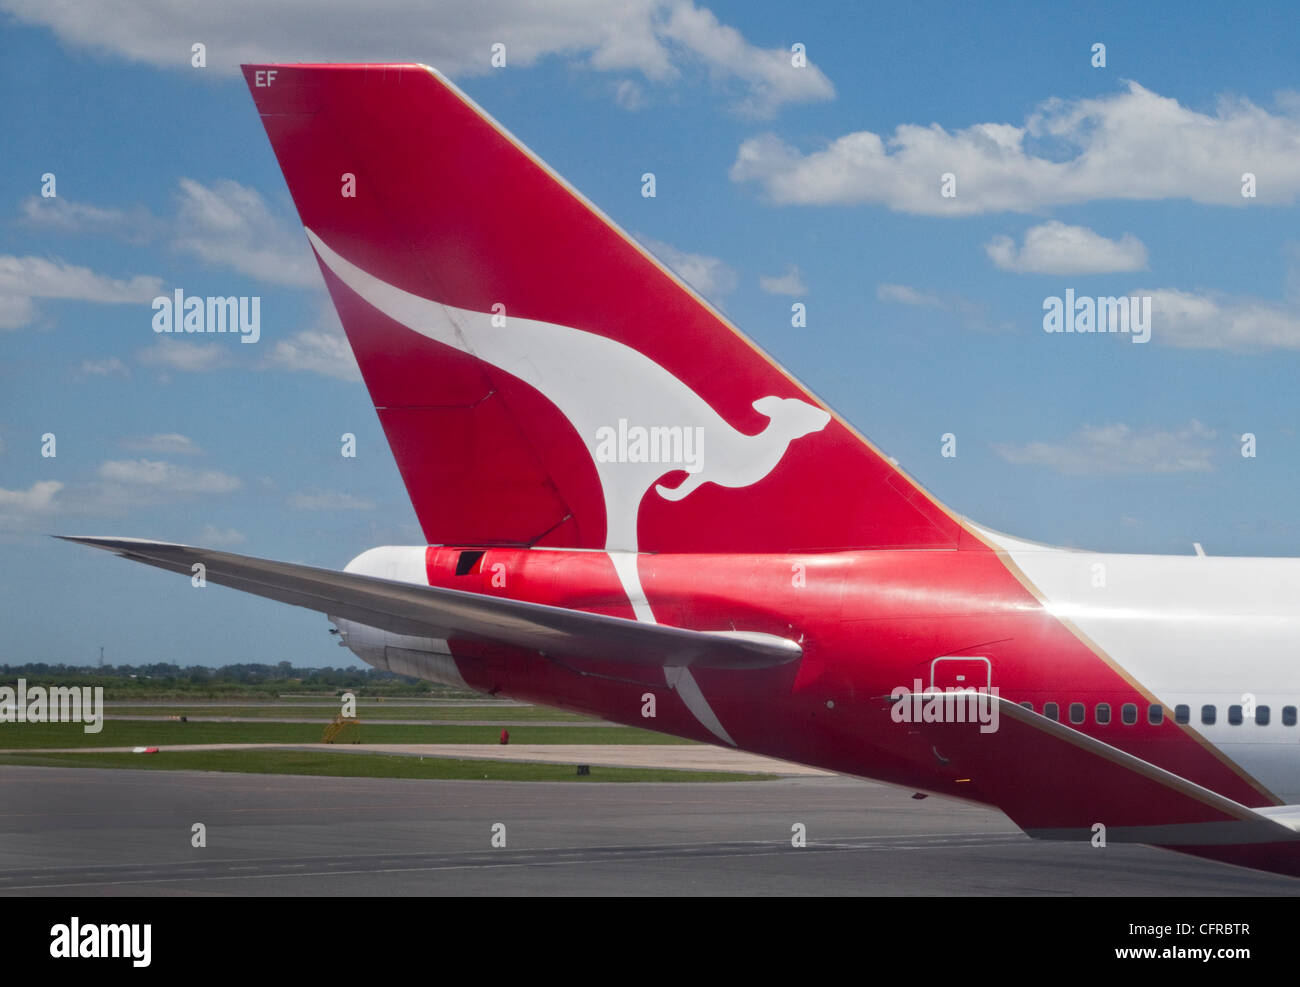 Qantas Logo on Aircraft Tail, Ministro Pistarini Airport, Buenos Aires, Argentina Stock Photo